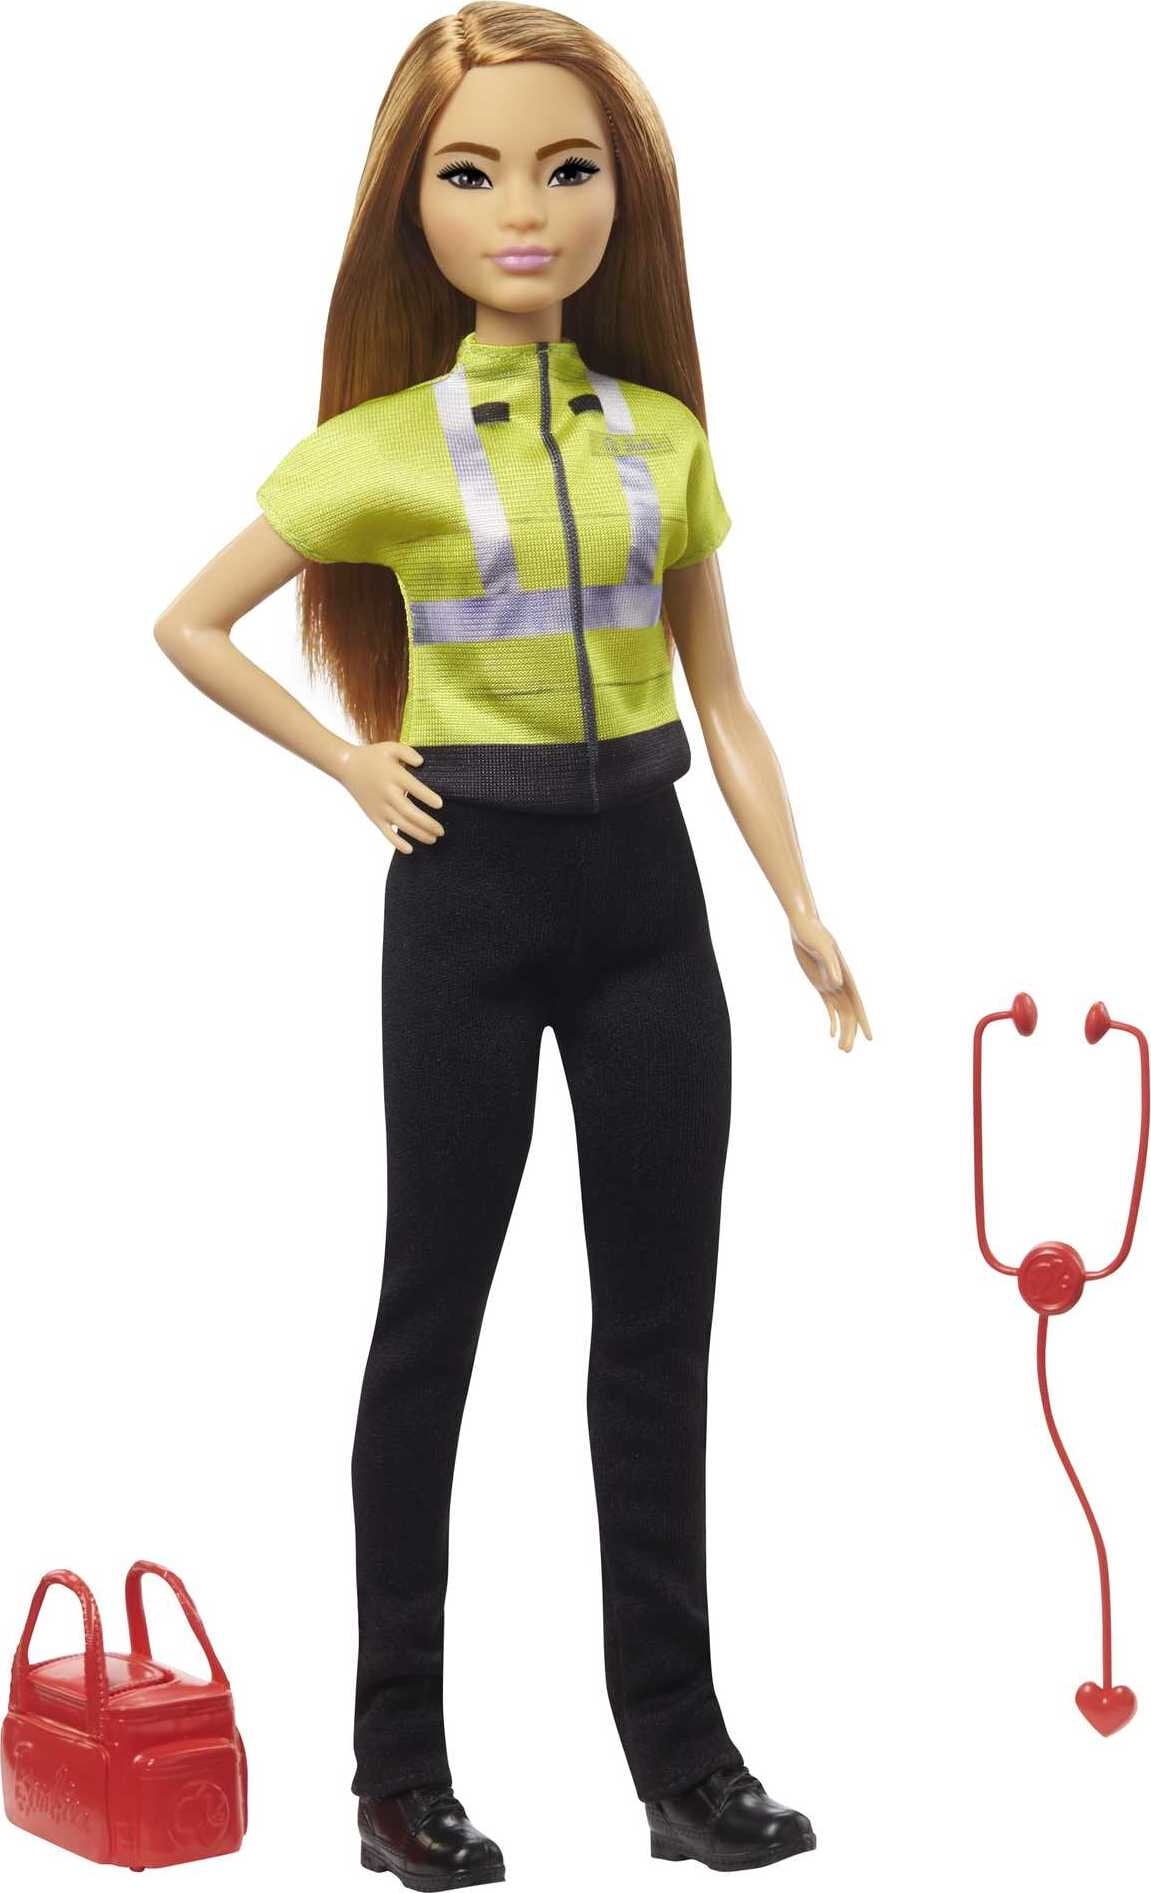 Sparkle Girlz Green White Black Top Shirt fits Barbie REGULAR PETITE Doll 